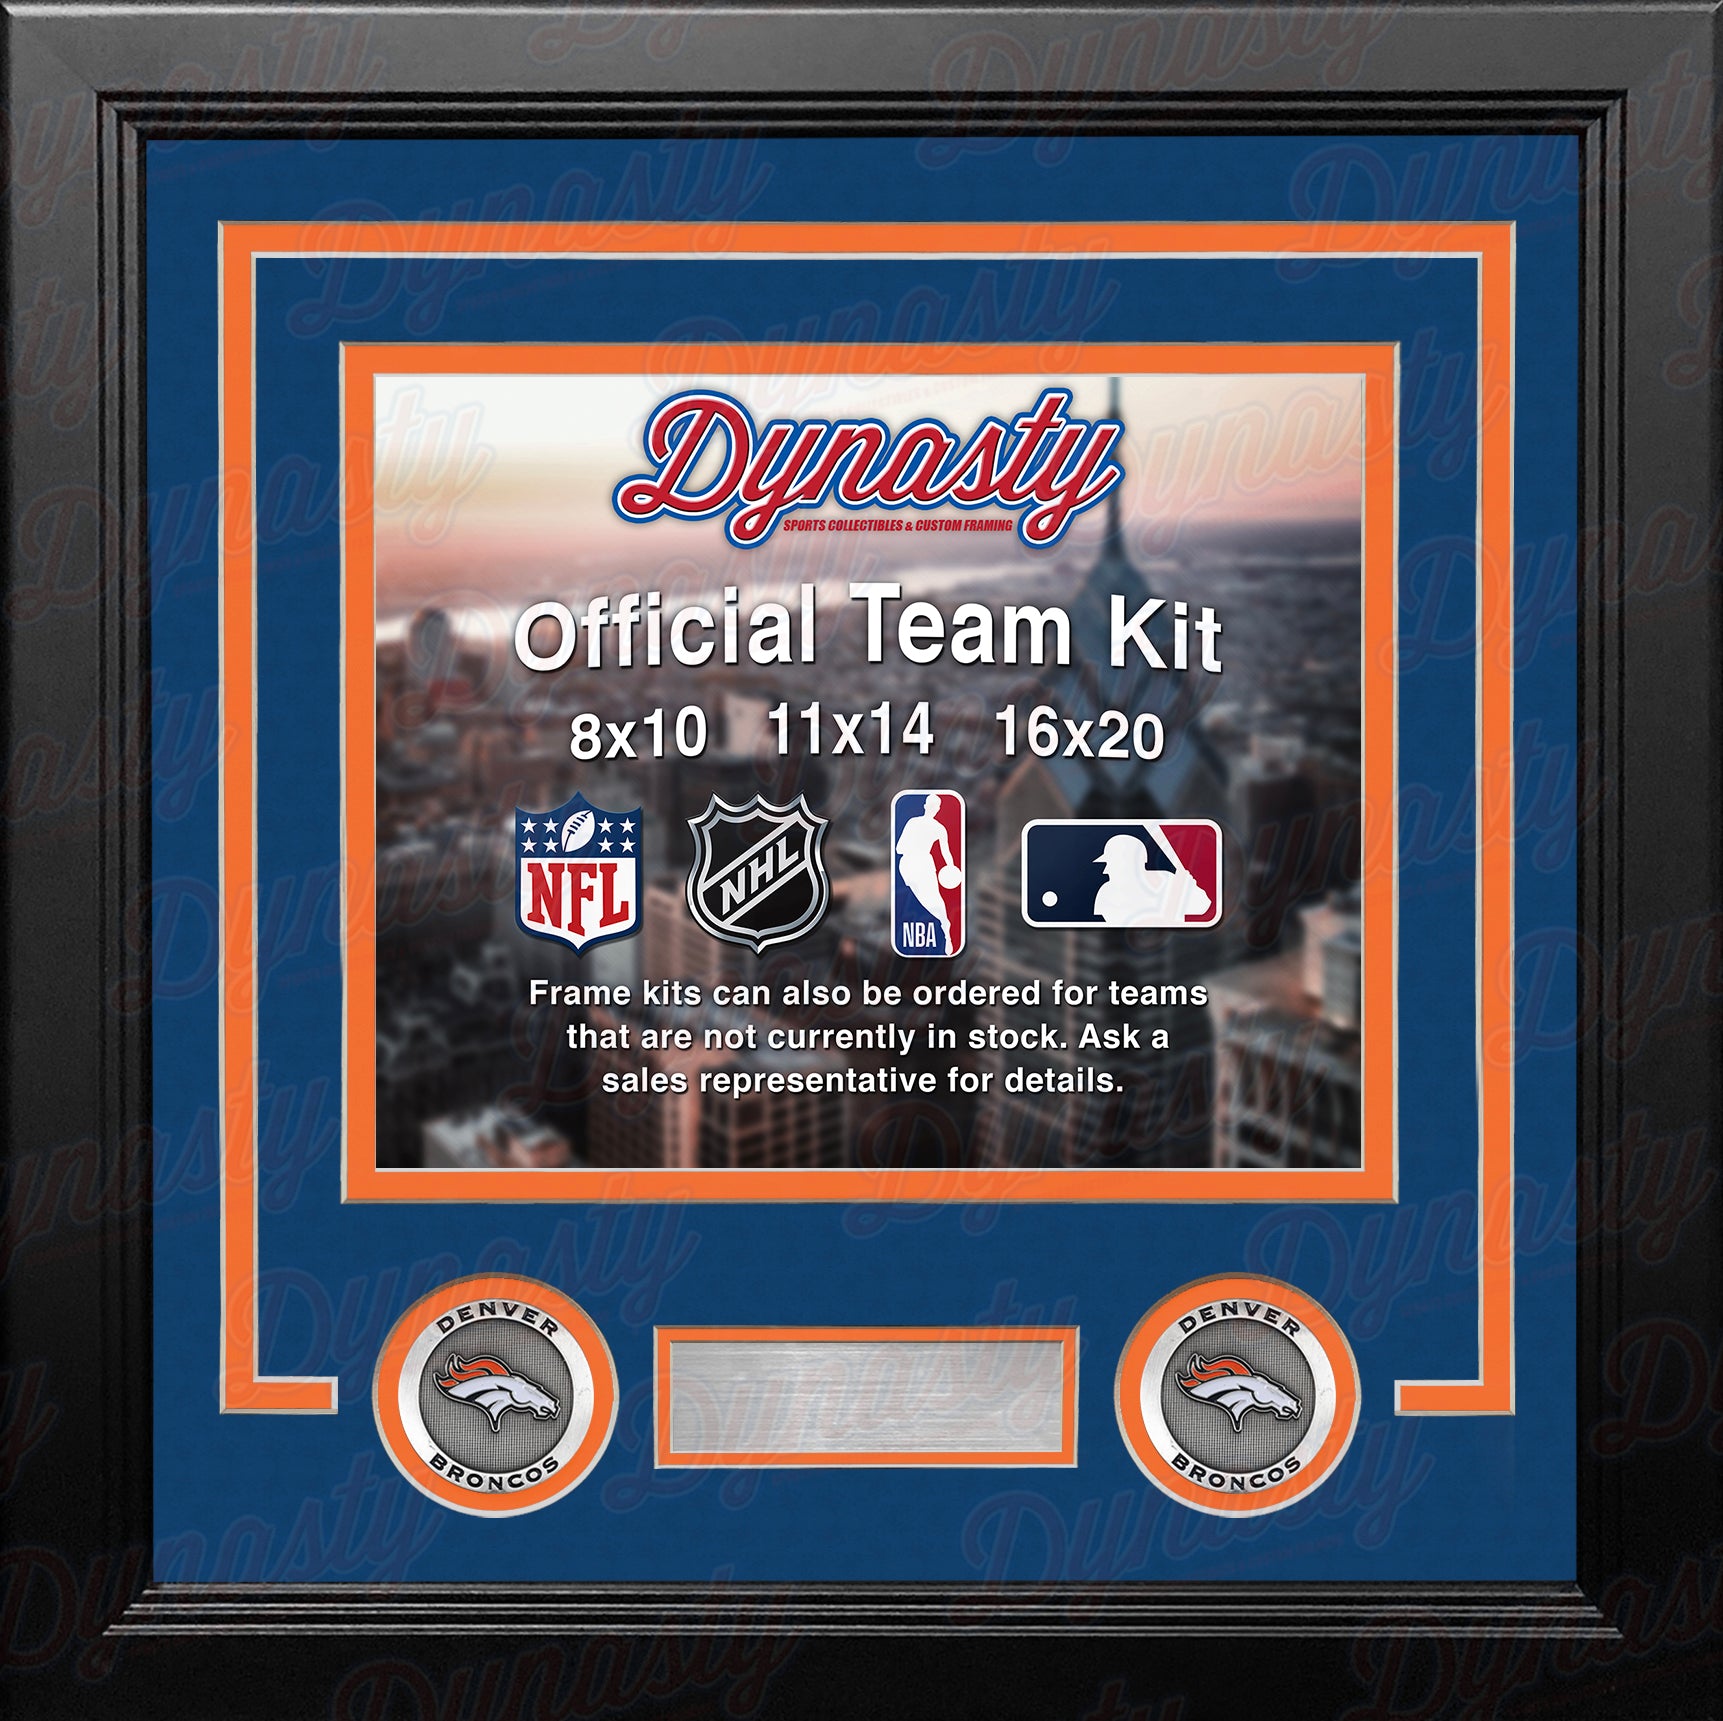 NFL Football Photo Picture Frame Kit - Denver Broncos (Blue Matting, Orange Trim) - Dynasty Sports & Framing 